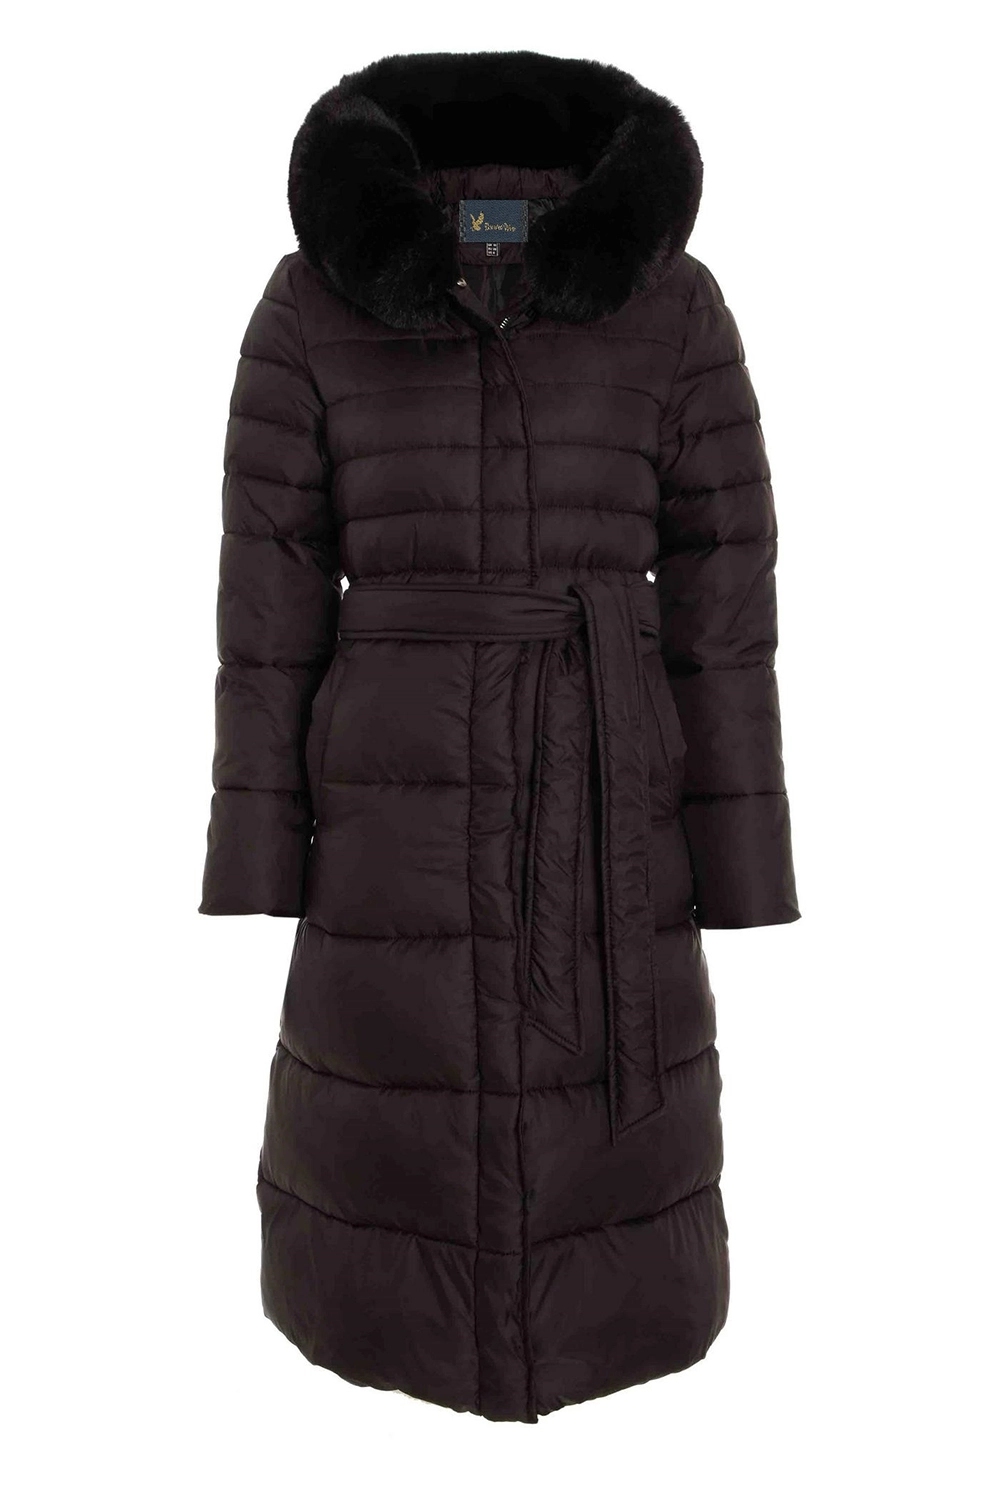 Black Padded Faux Fur Hooded Coat